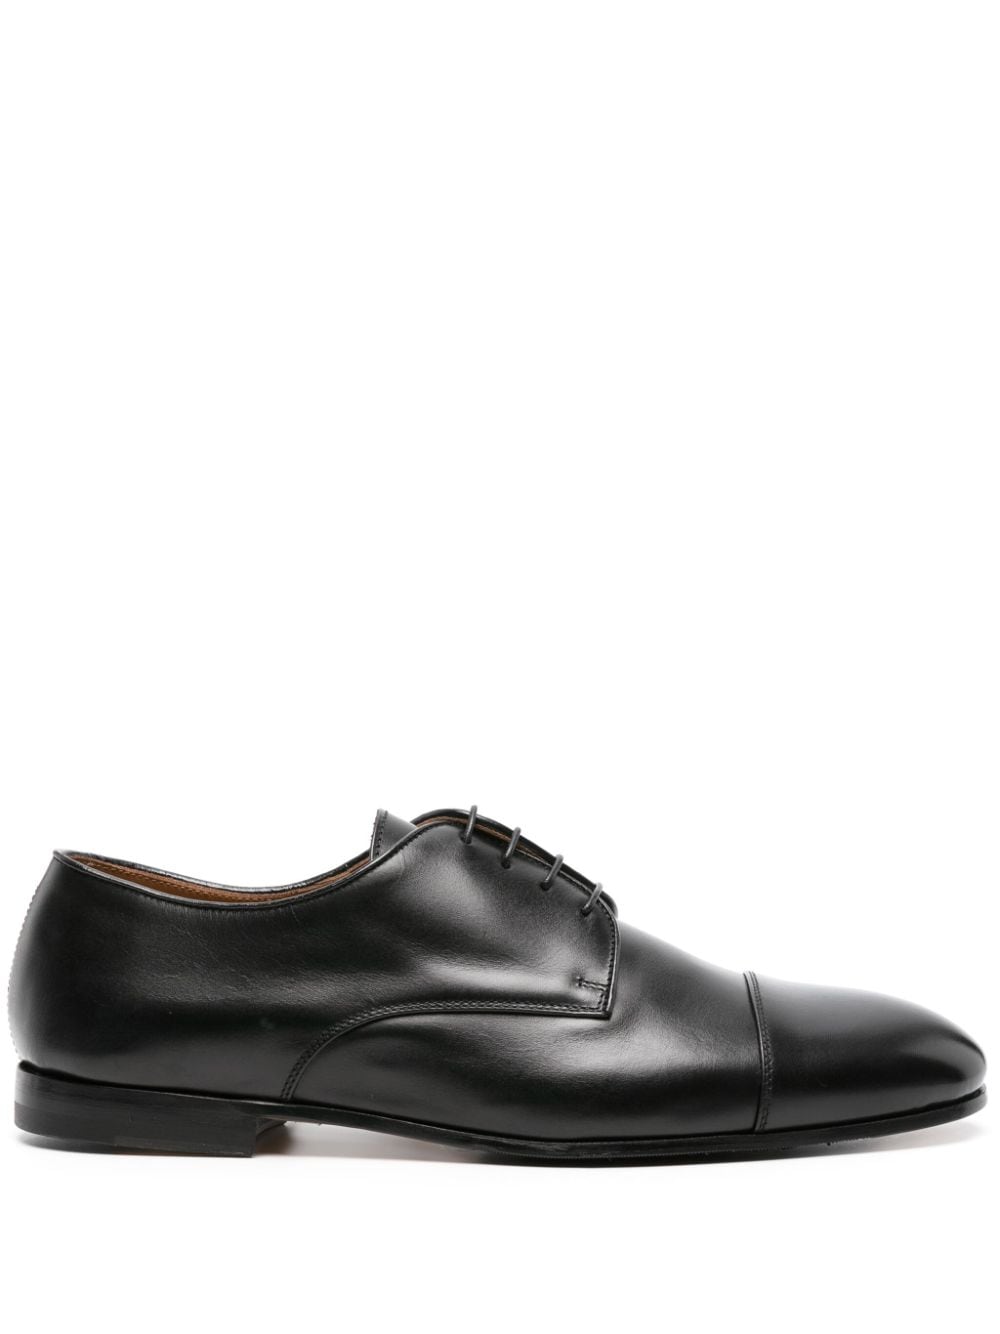 Doucal's lace-up patent leather derby shoes - Black von Doucal's